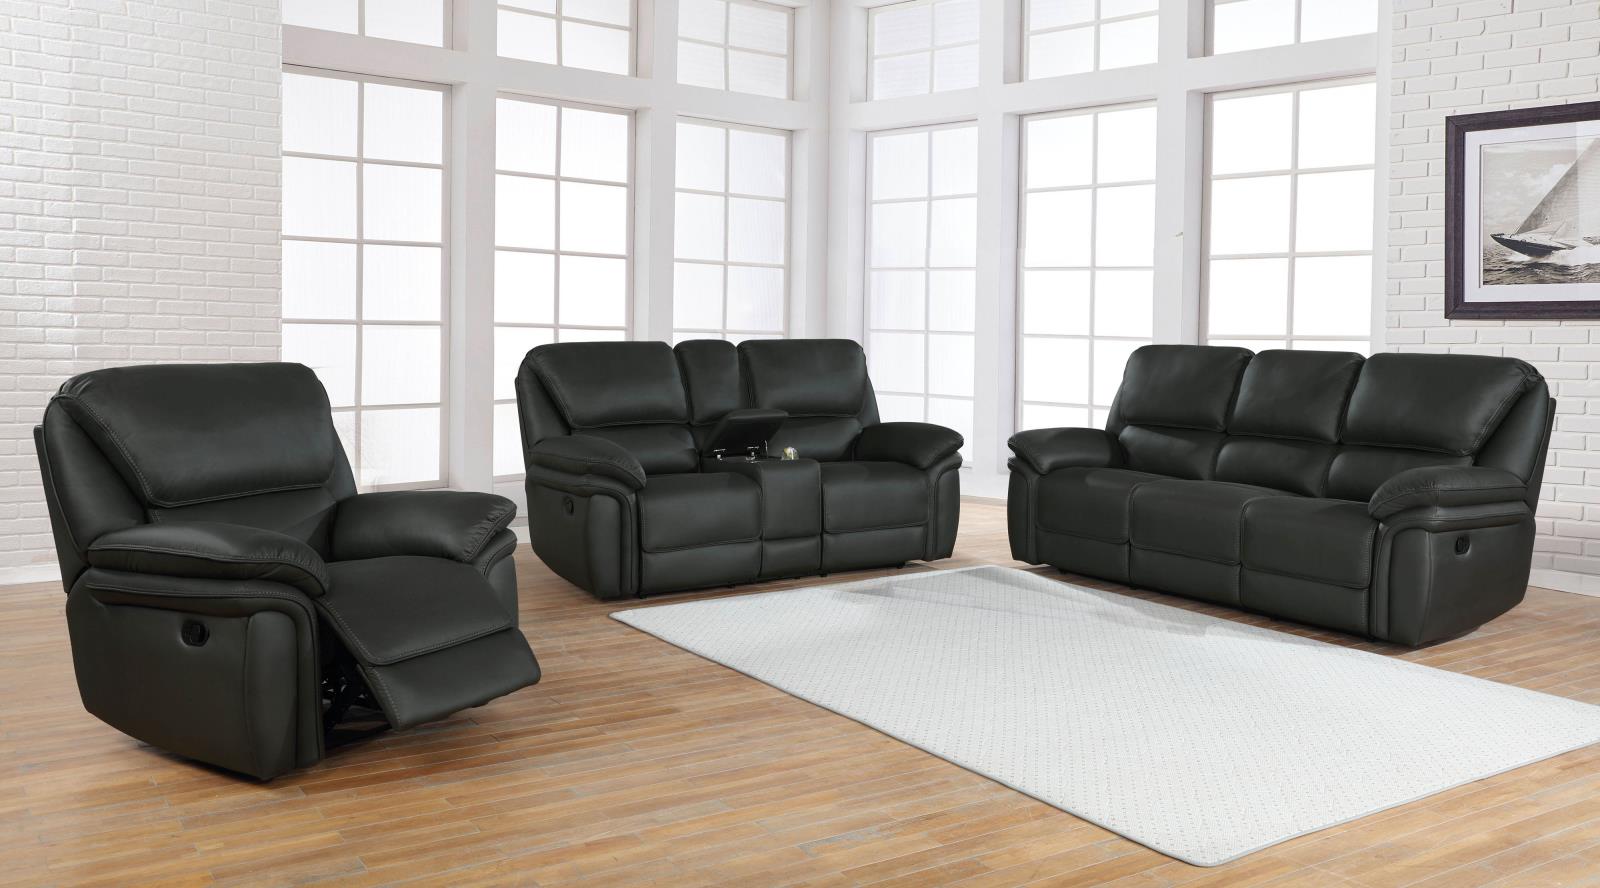 Breton Upholstered Tufted Back Motion Sofa - What A Room